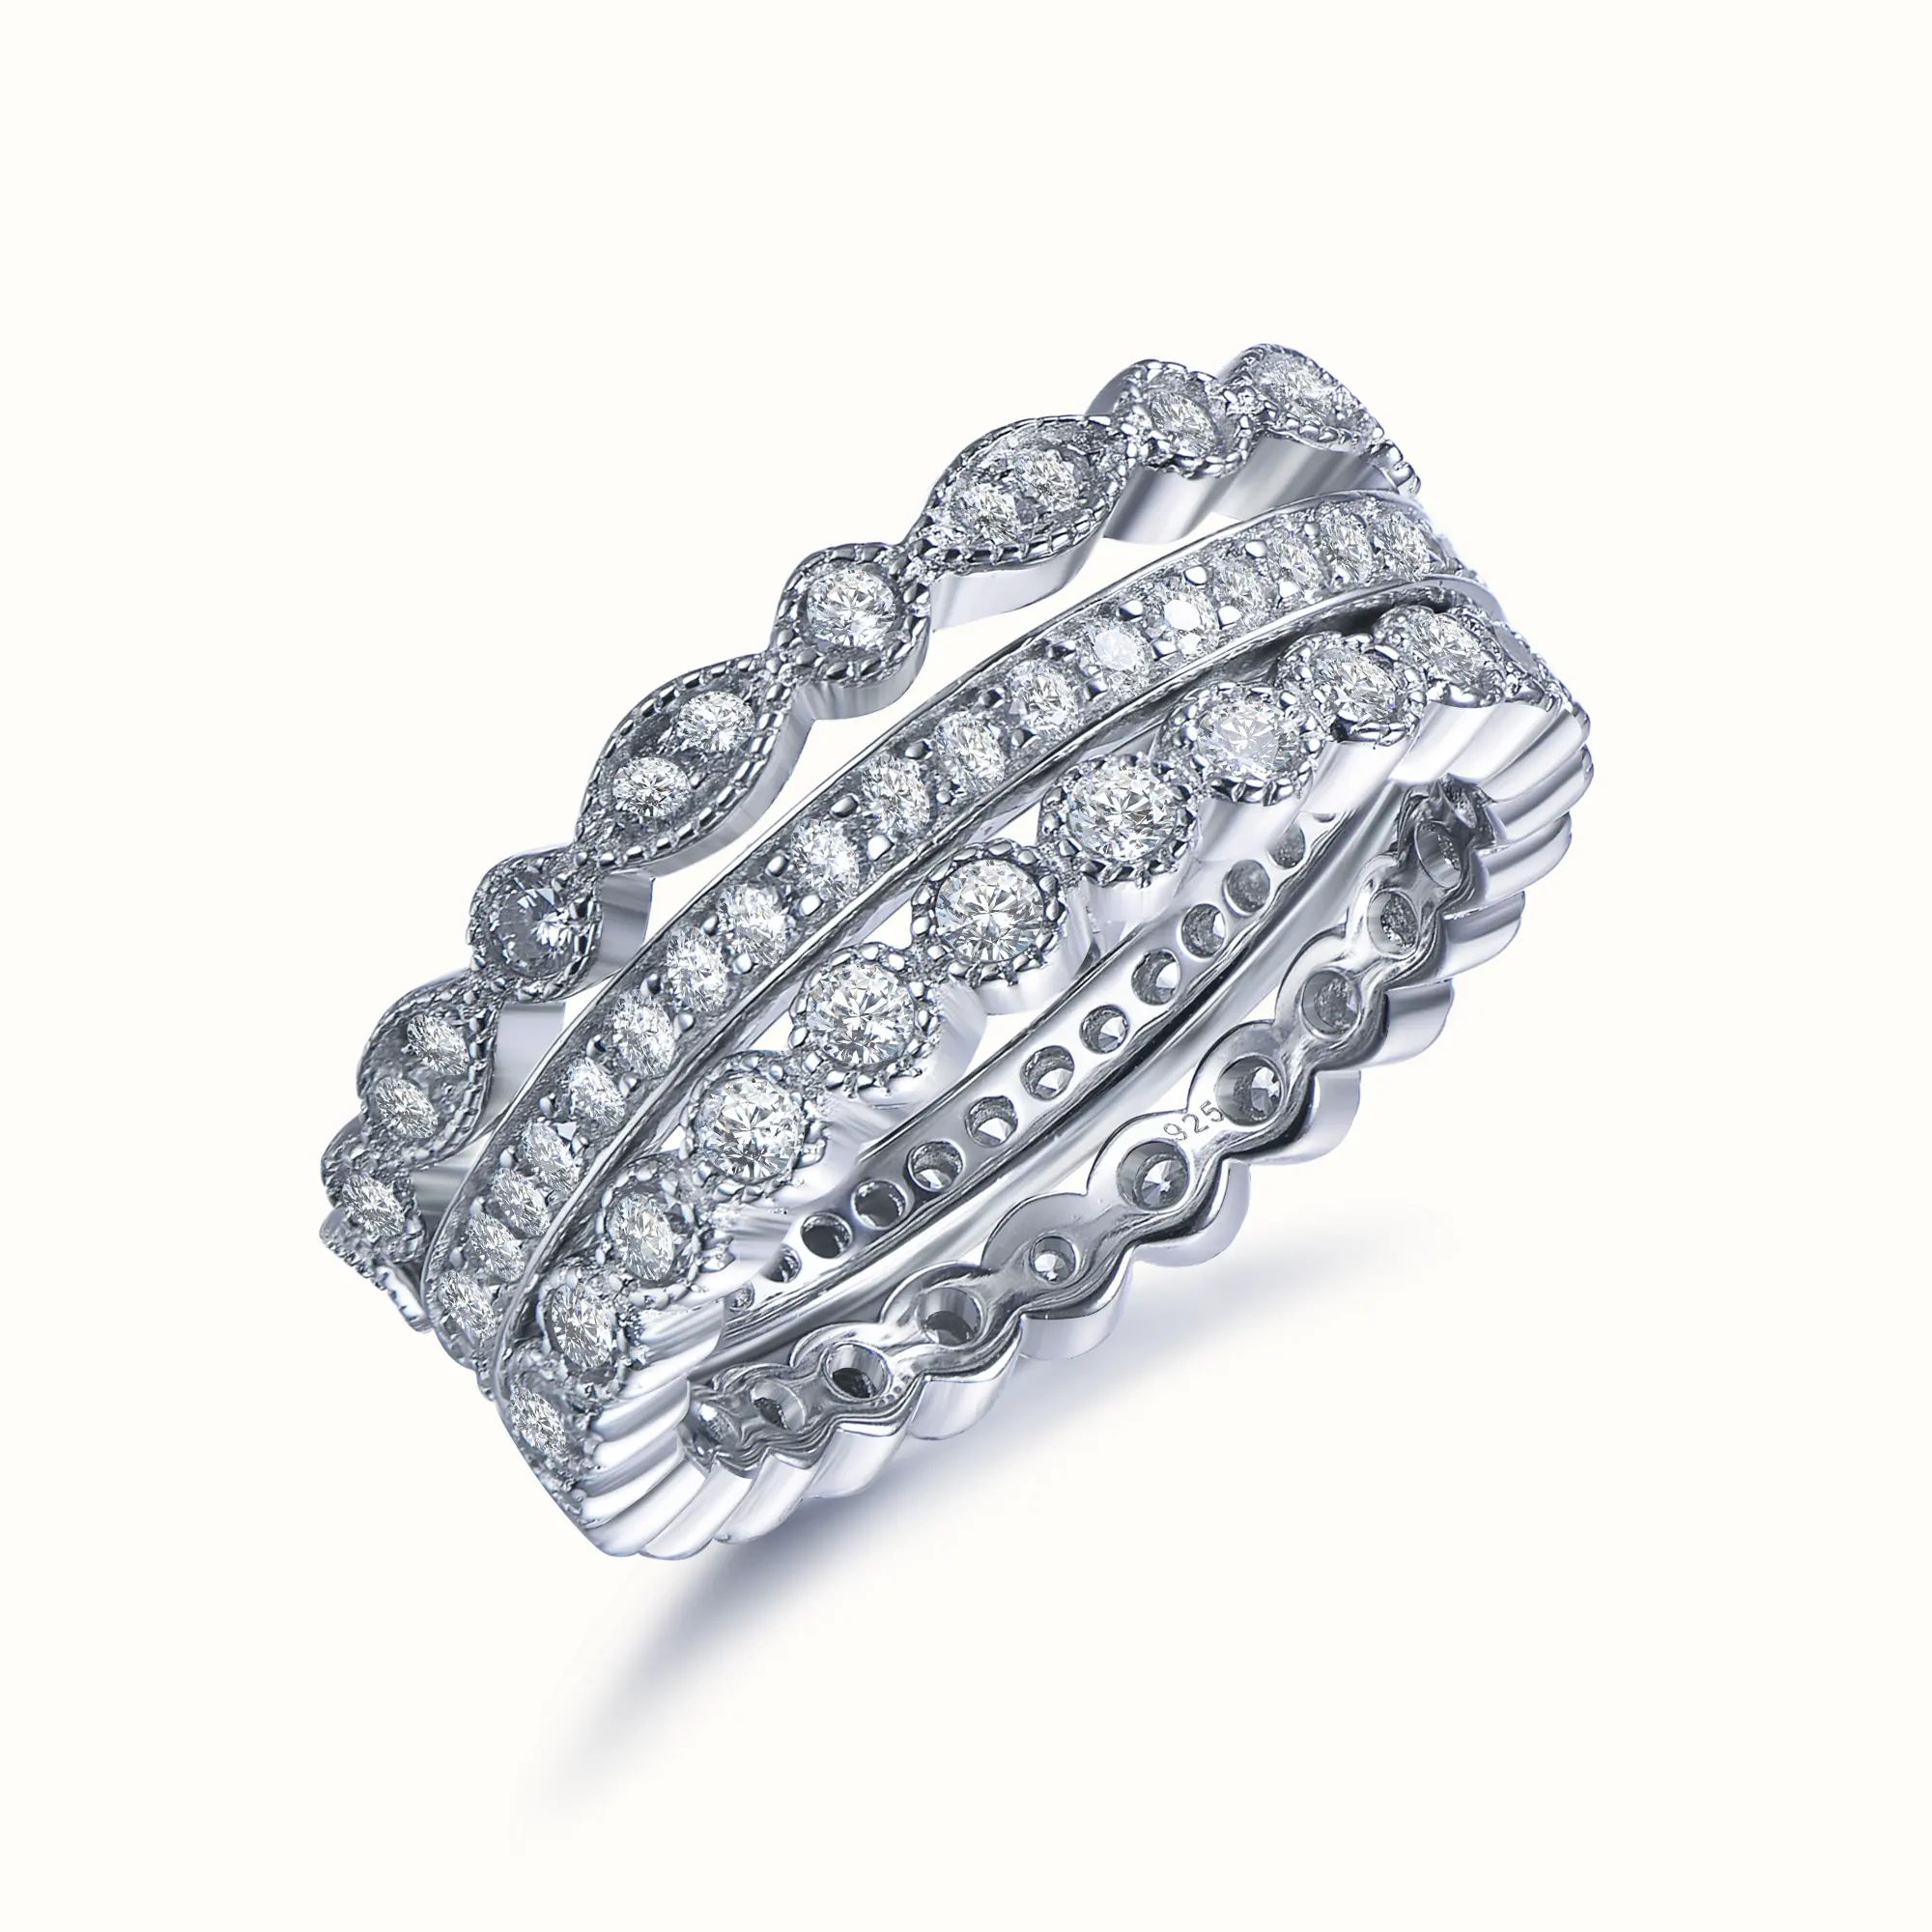 fashion 925 sterling silver jewelry CZ diamond rings set wedding women couple engagement rings